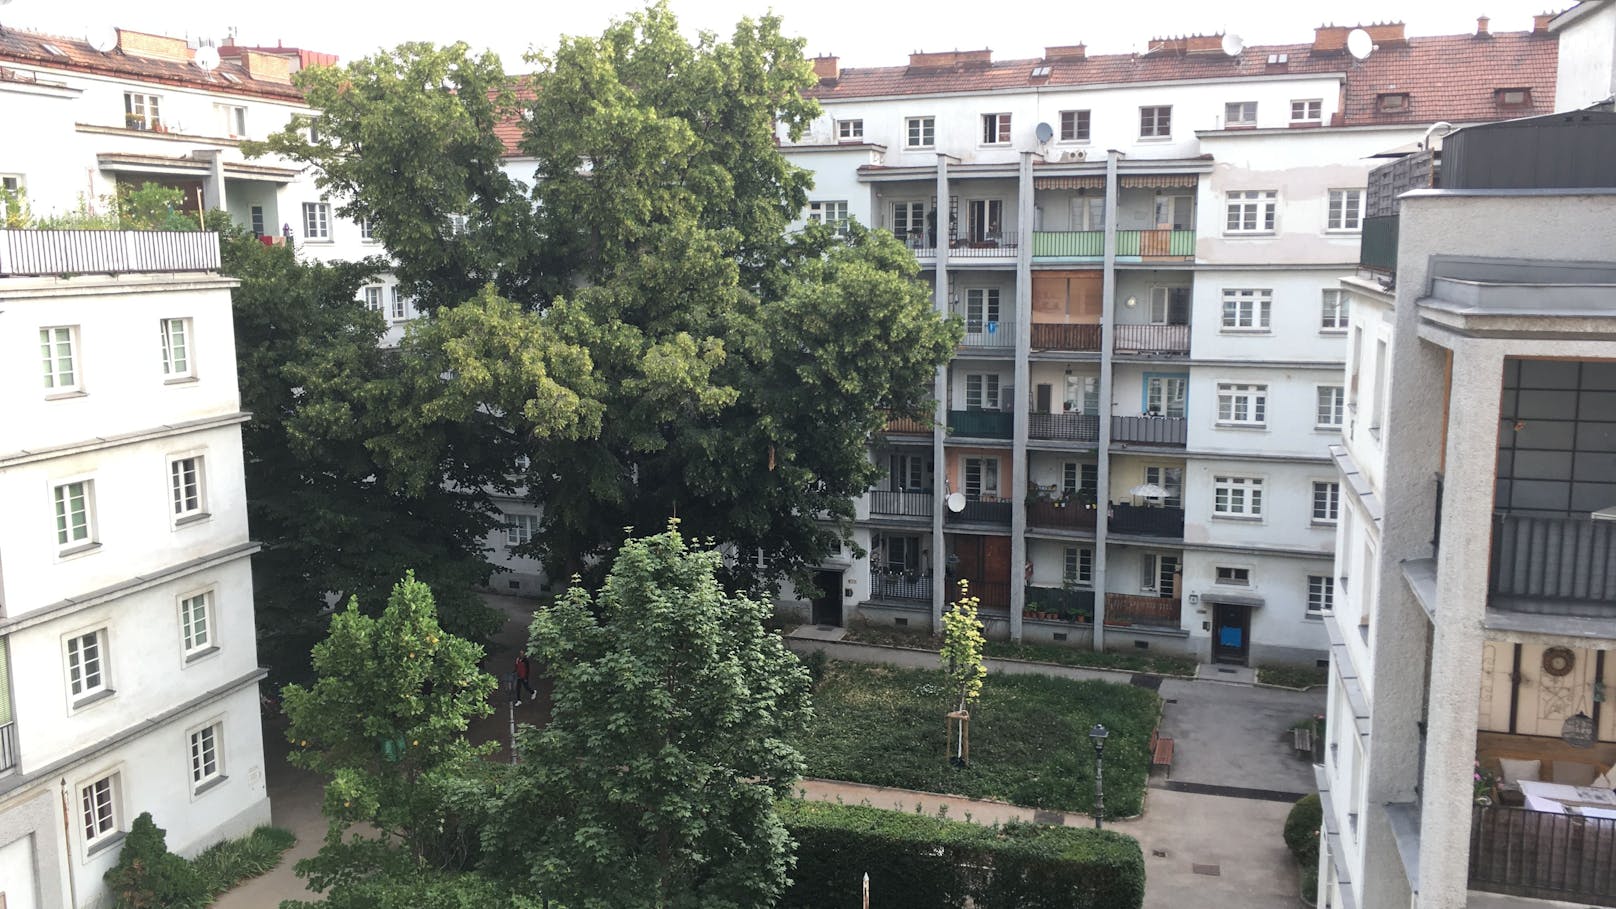 Vespa-Rowdy terrorisiert Mieter in Wiener Gemeindebau